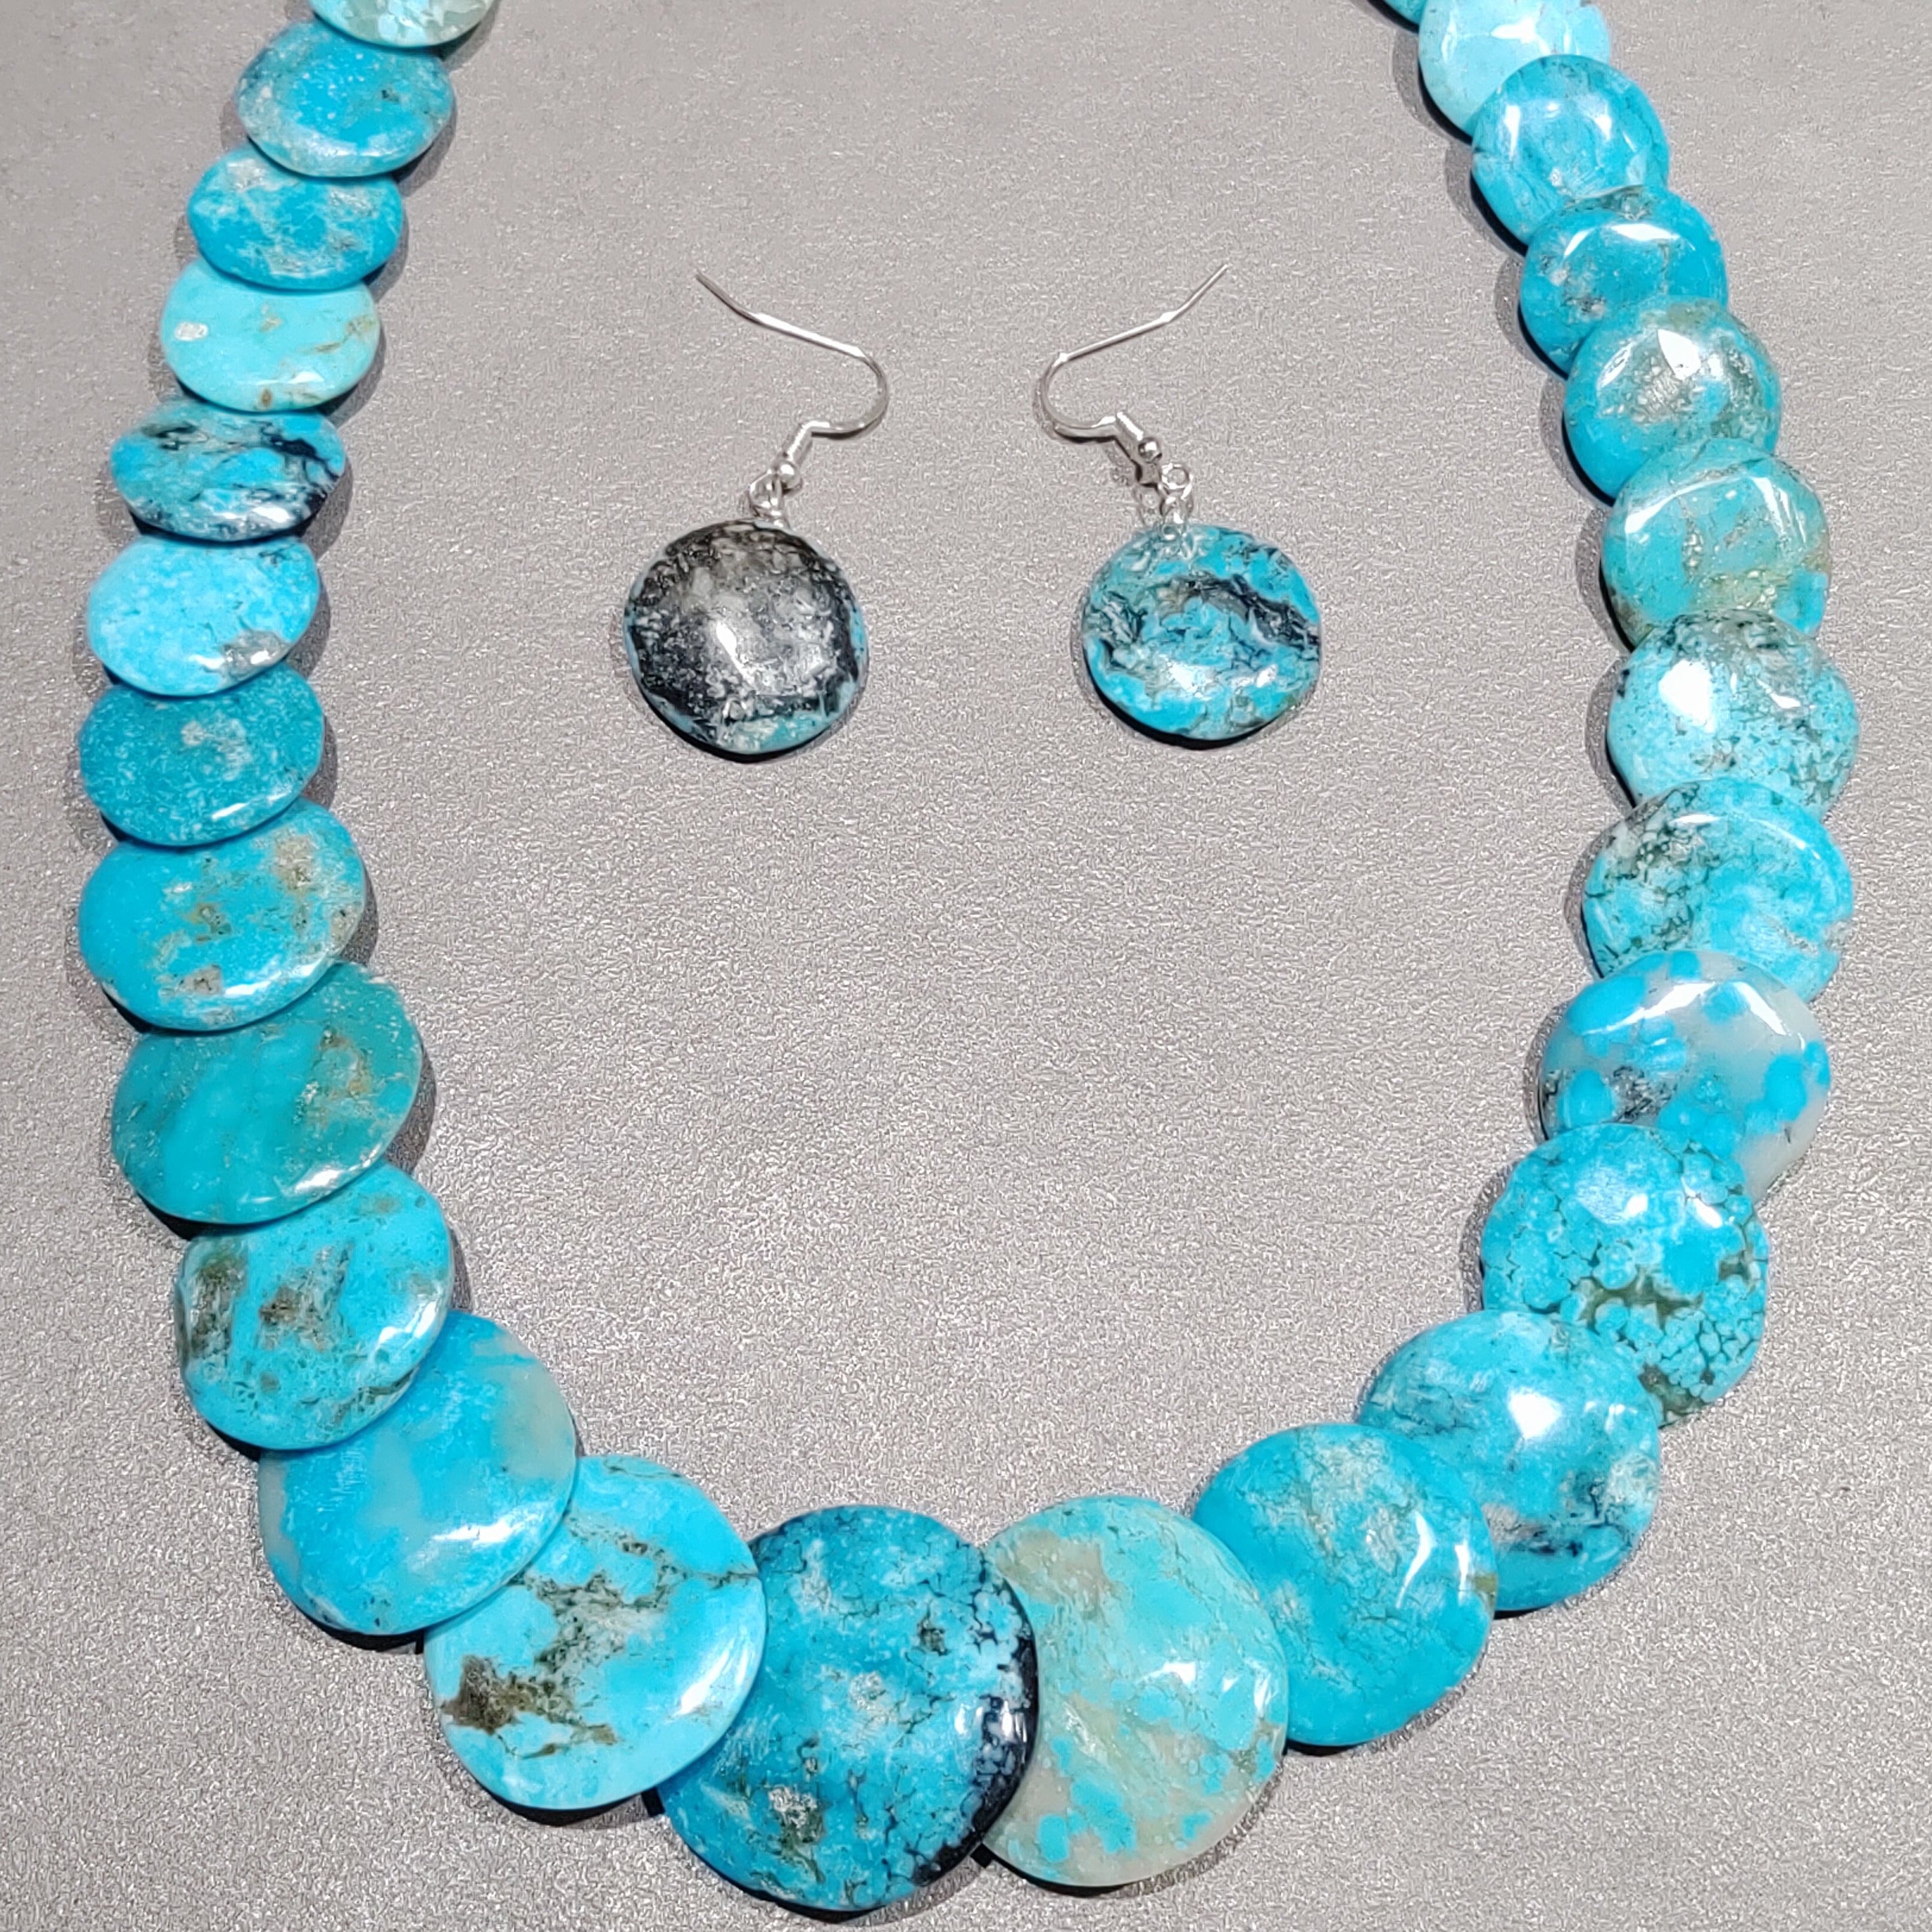 Joe and Joan Garcia Kewa Turquoise Necklace-Earrings Set - Handmade Native American